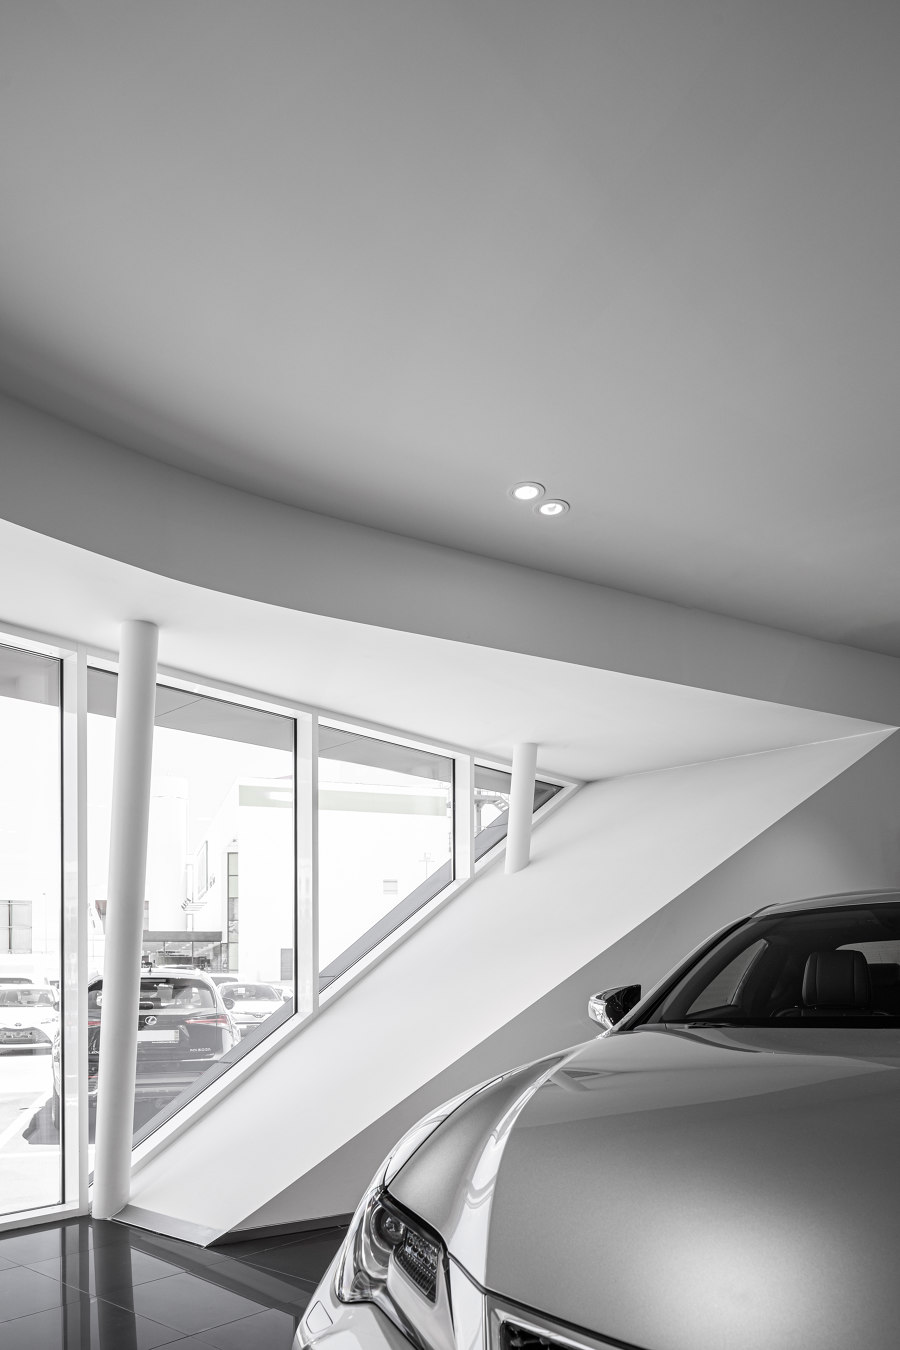 Lexus Faro de Rarcon | Showrooms